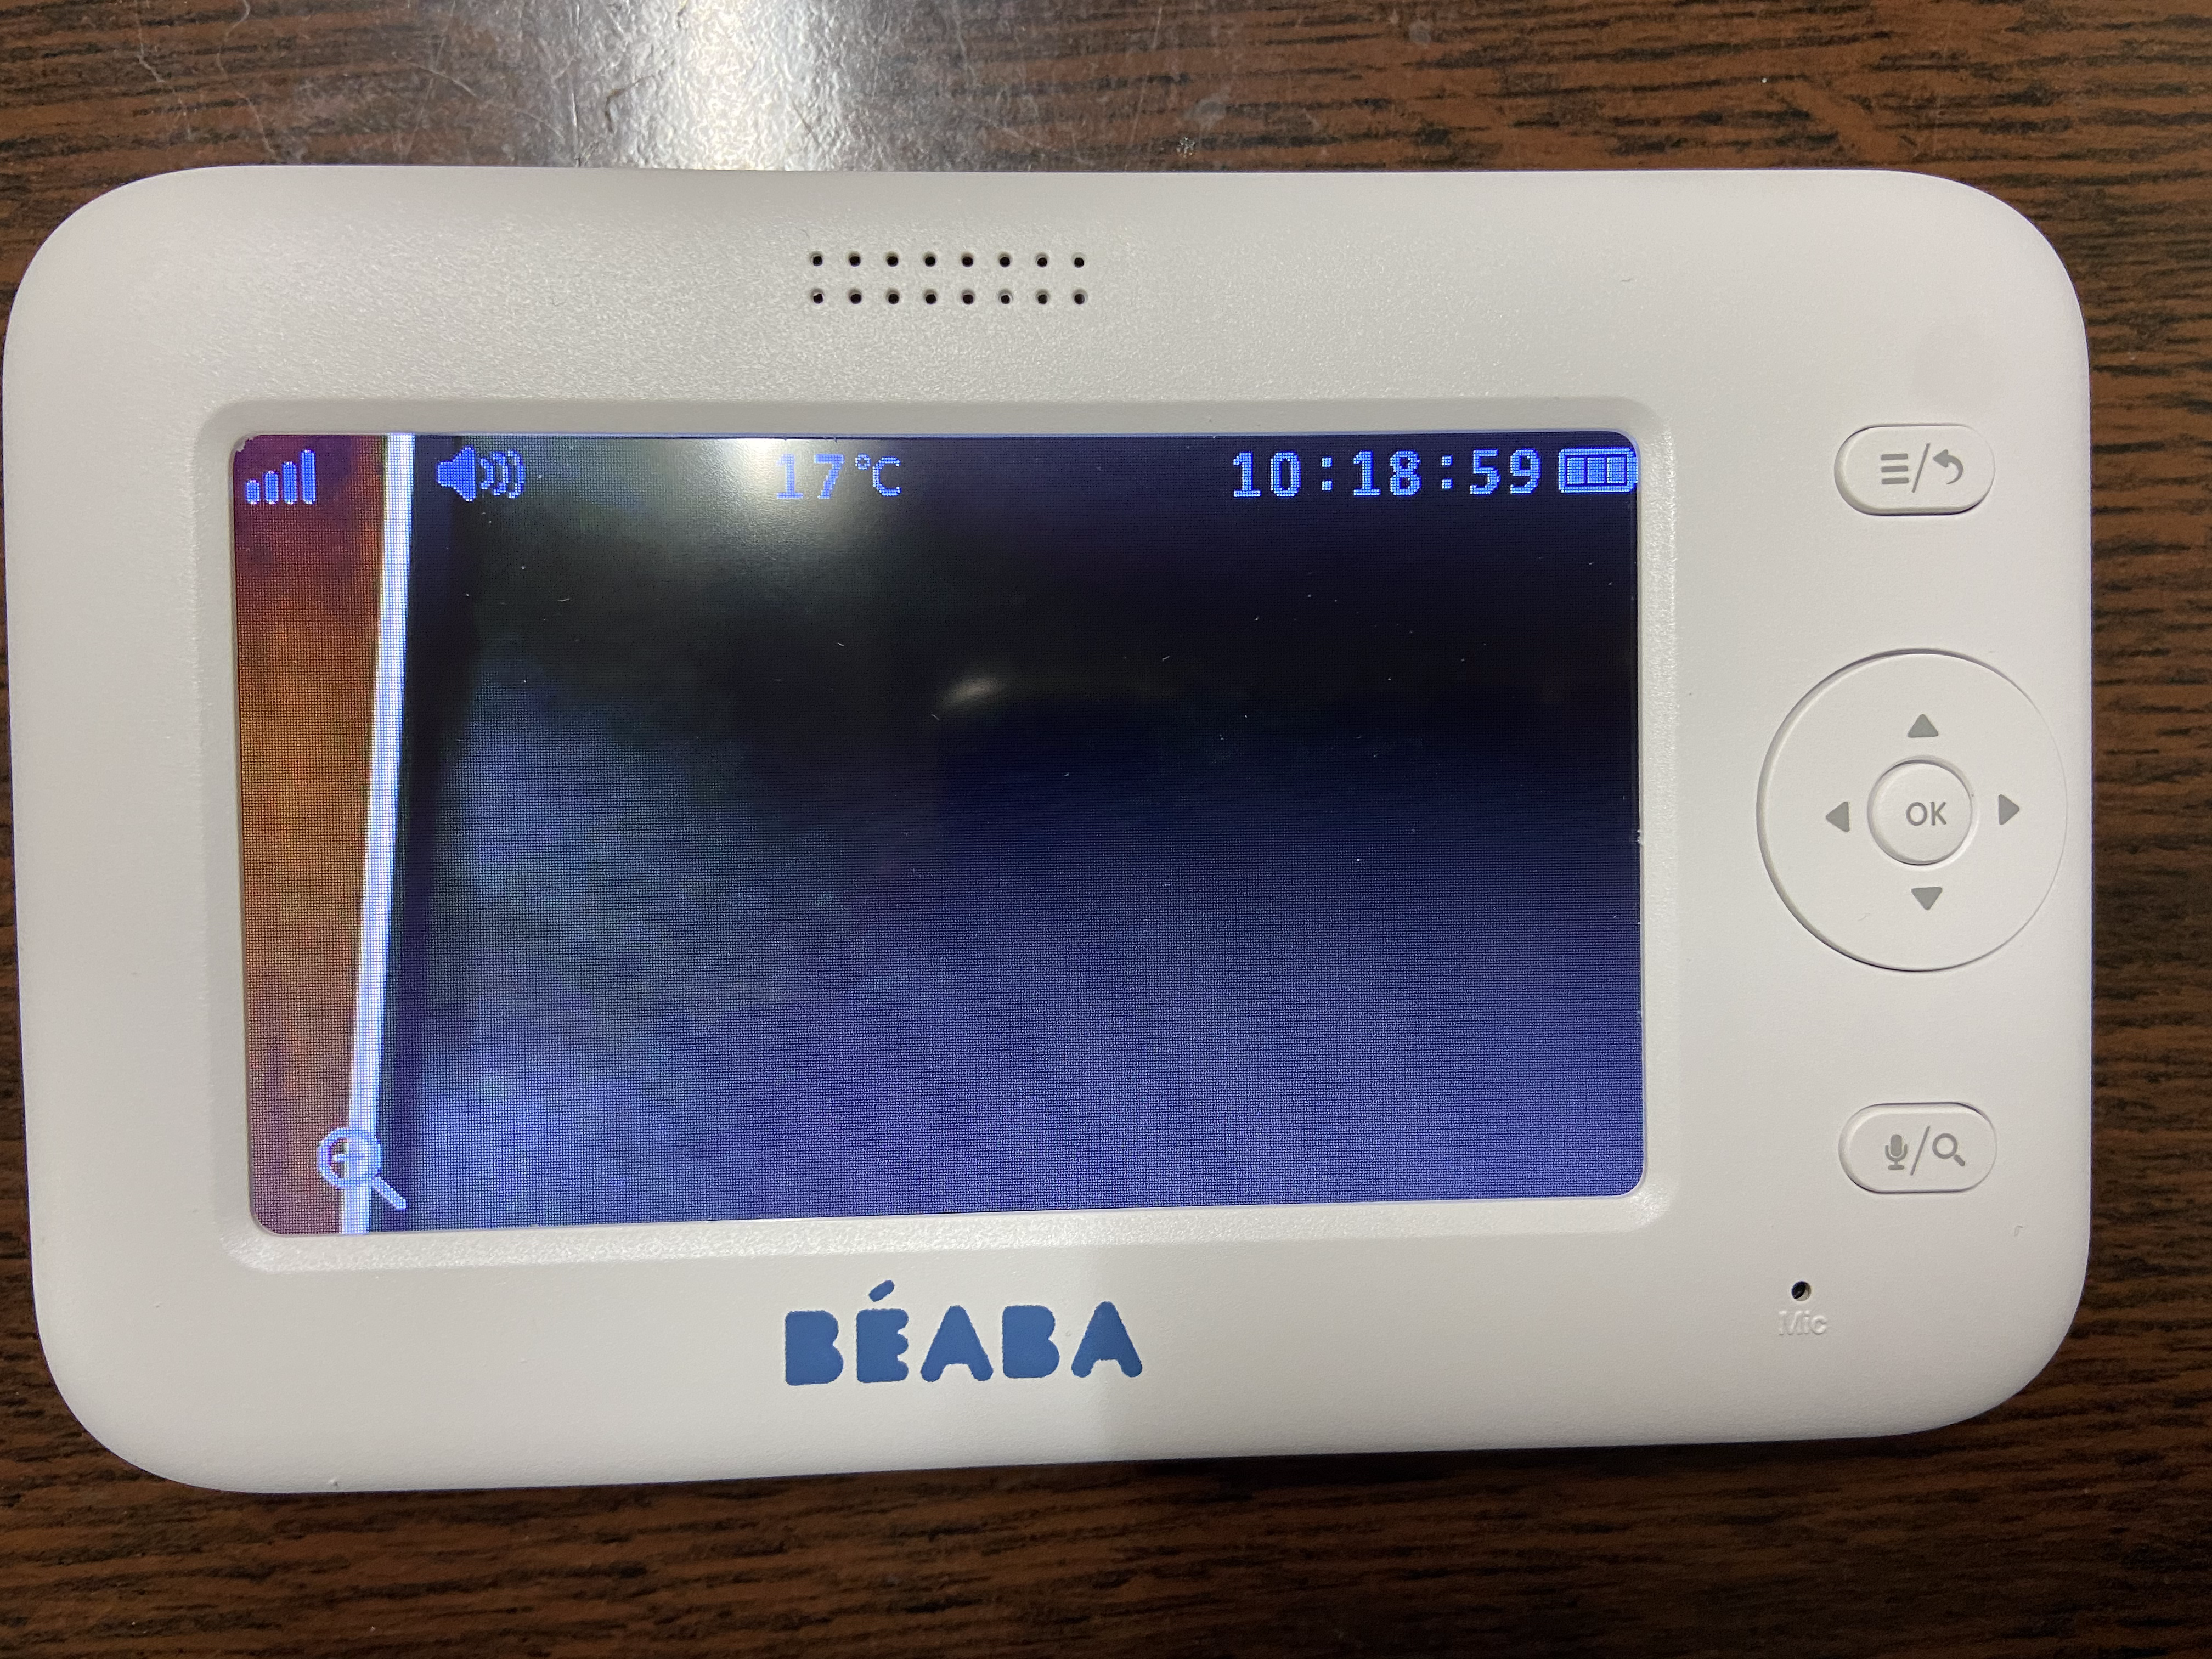 Camera additionnelle beaba zen + - Béaba